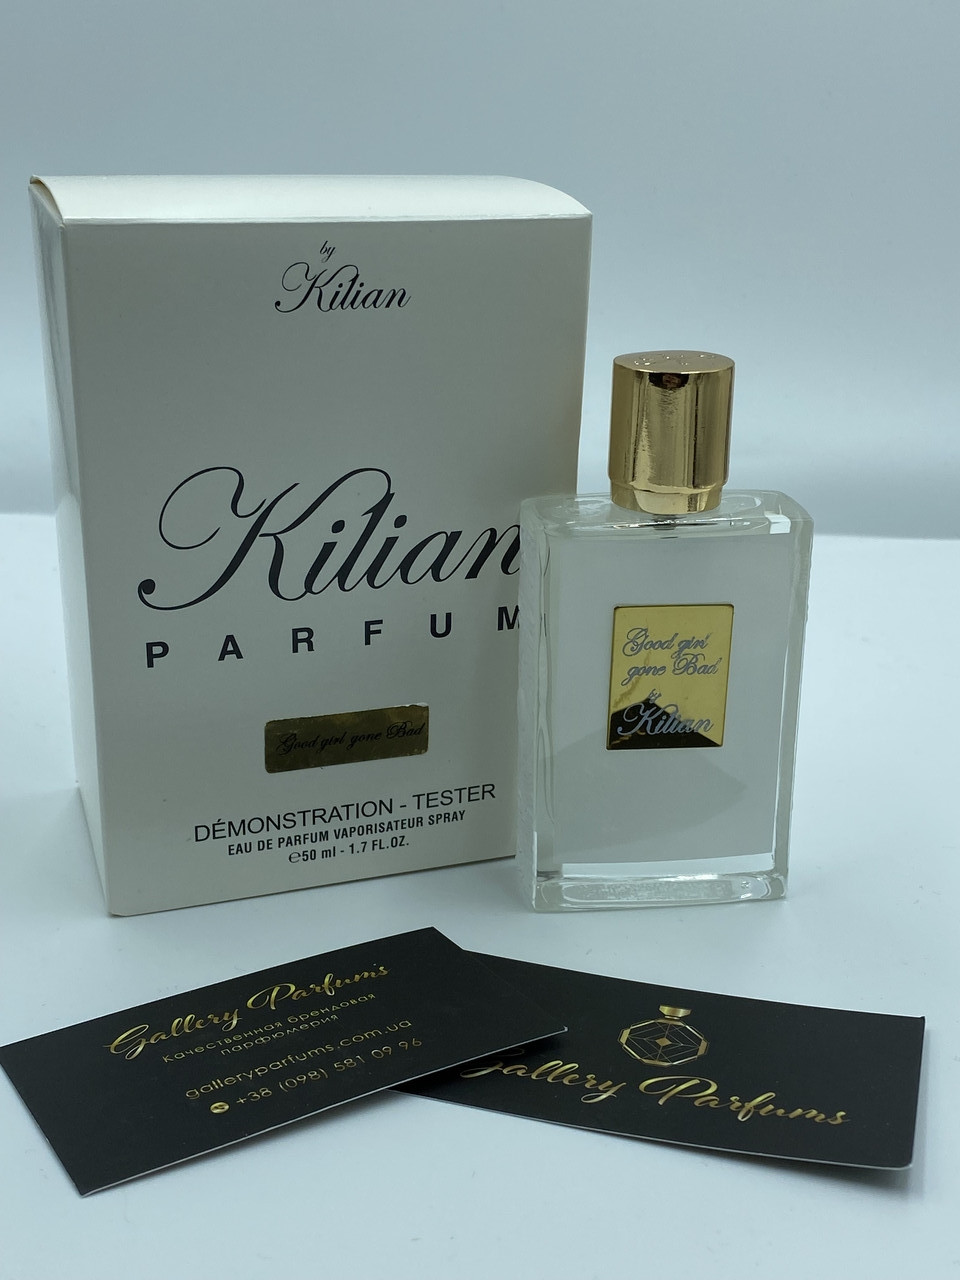 Kilian Ladies Good Girl Gone Bad EDP Spray 3.38 oz (Tester) Fragrances  3700550223528